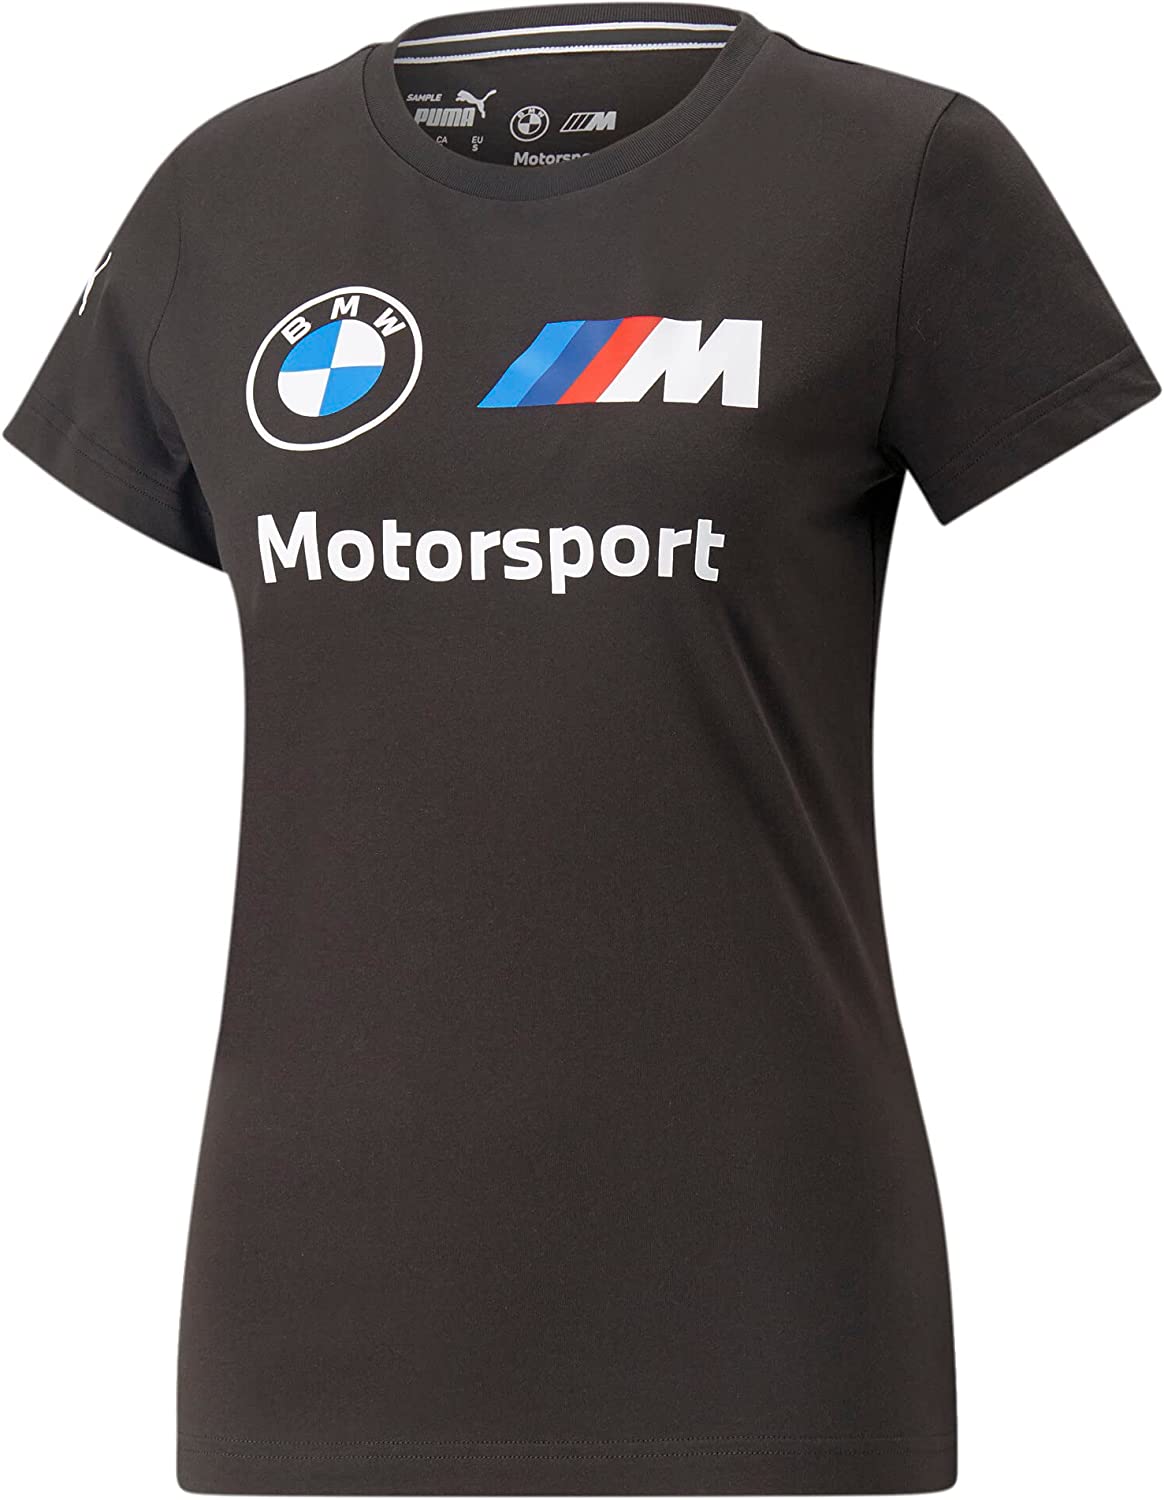 M Motorsport T-shirt